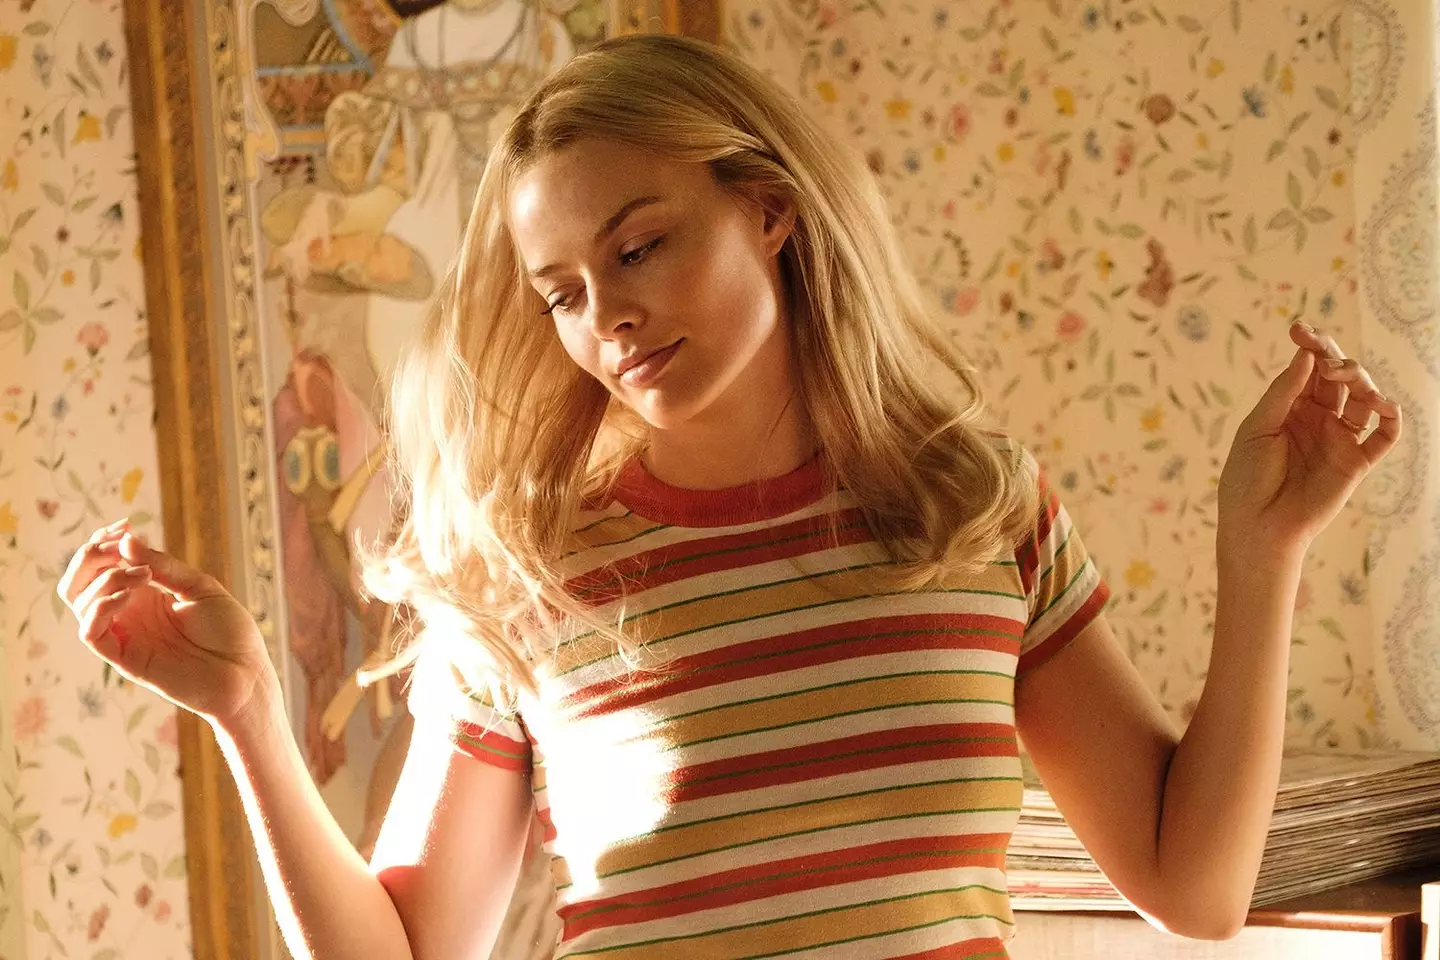 Margot Robbie played American actress Sharon Tate in Tarantino's movie.